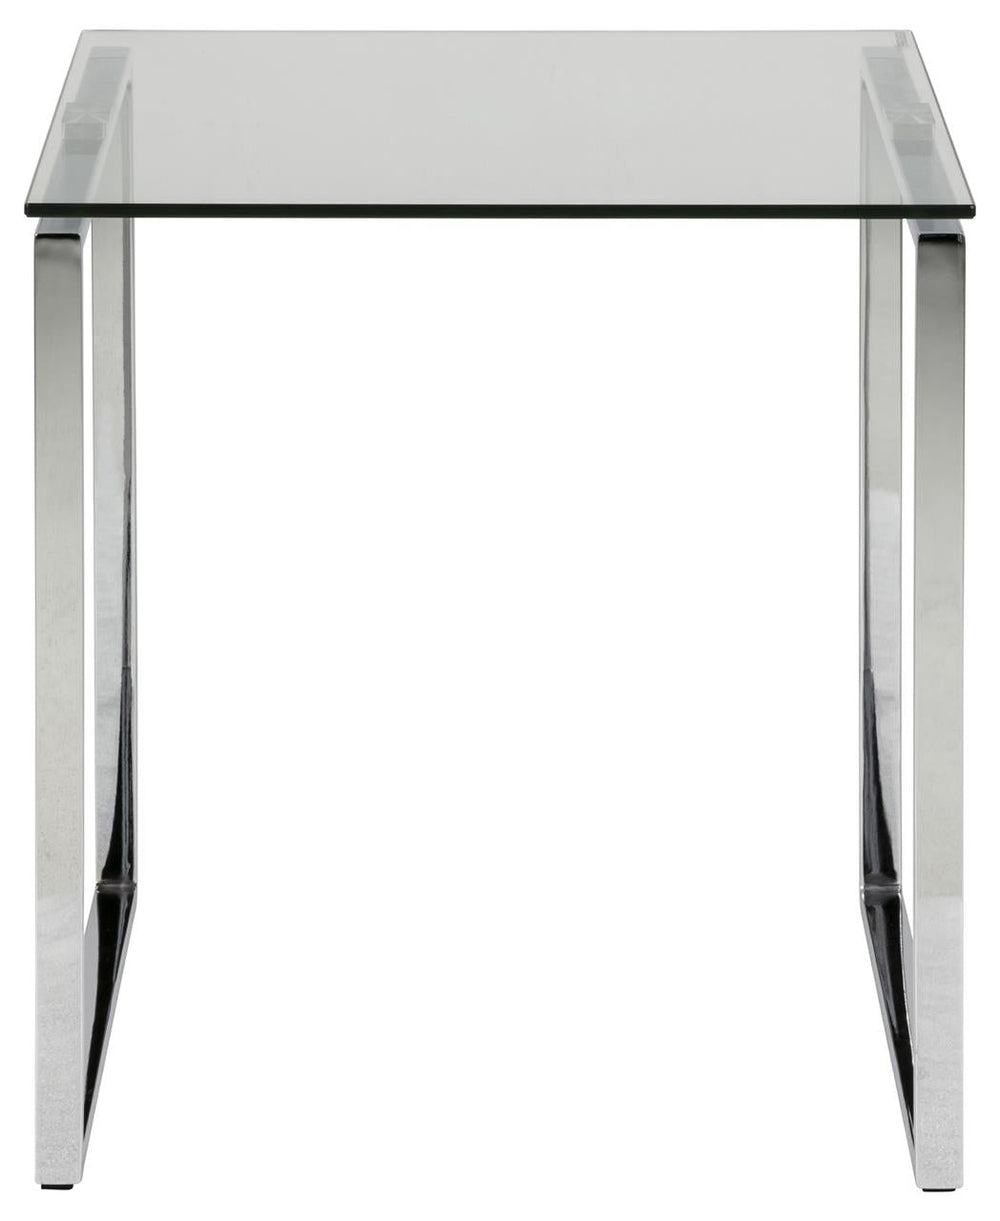 Marketlane 50cm Square Glass Top Side Table